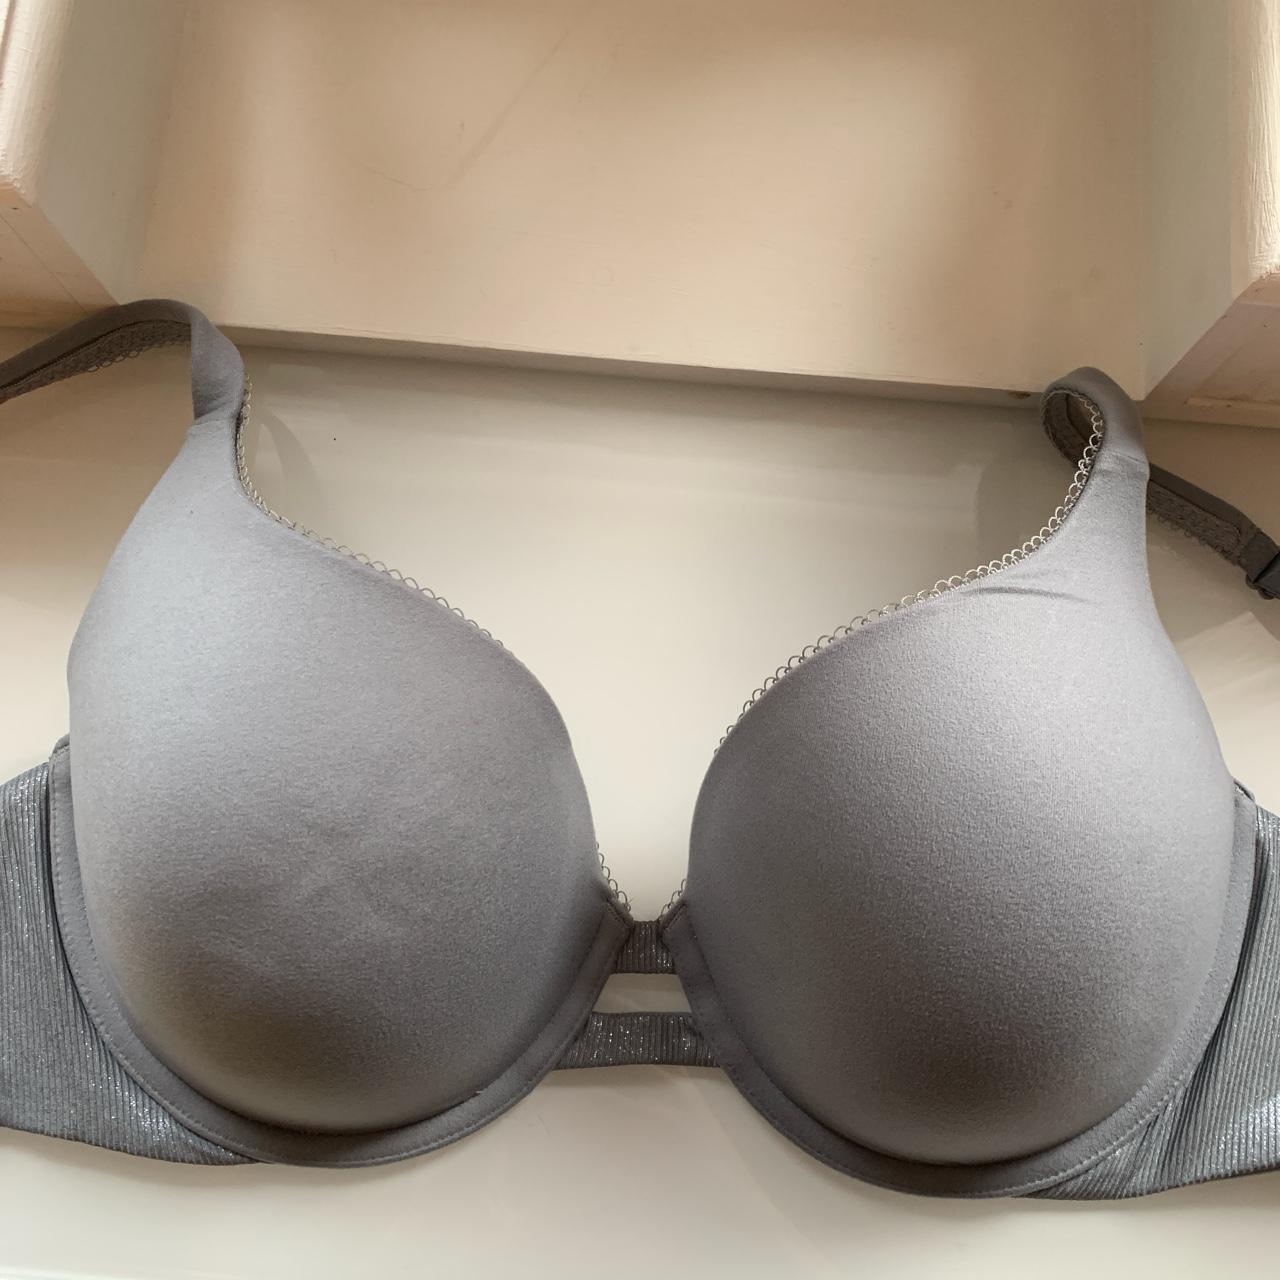 X3 Victoria secret padded bras. All 32DDD Can buy - Depop